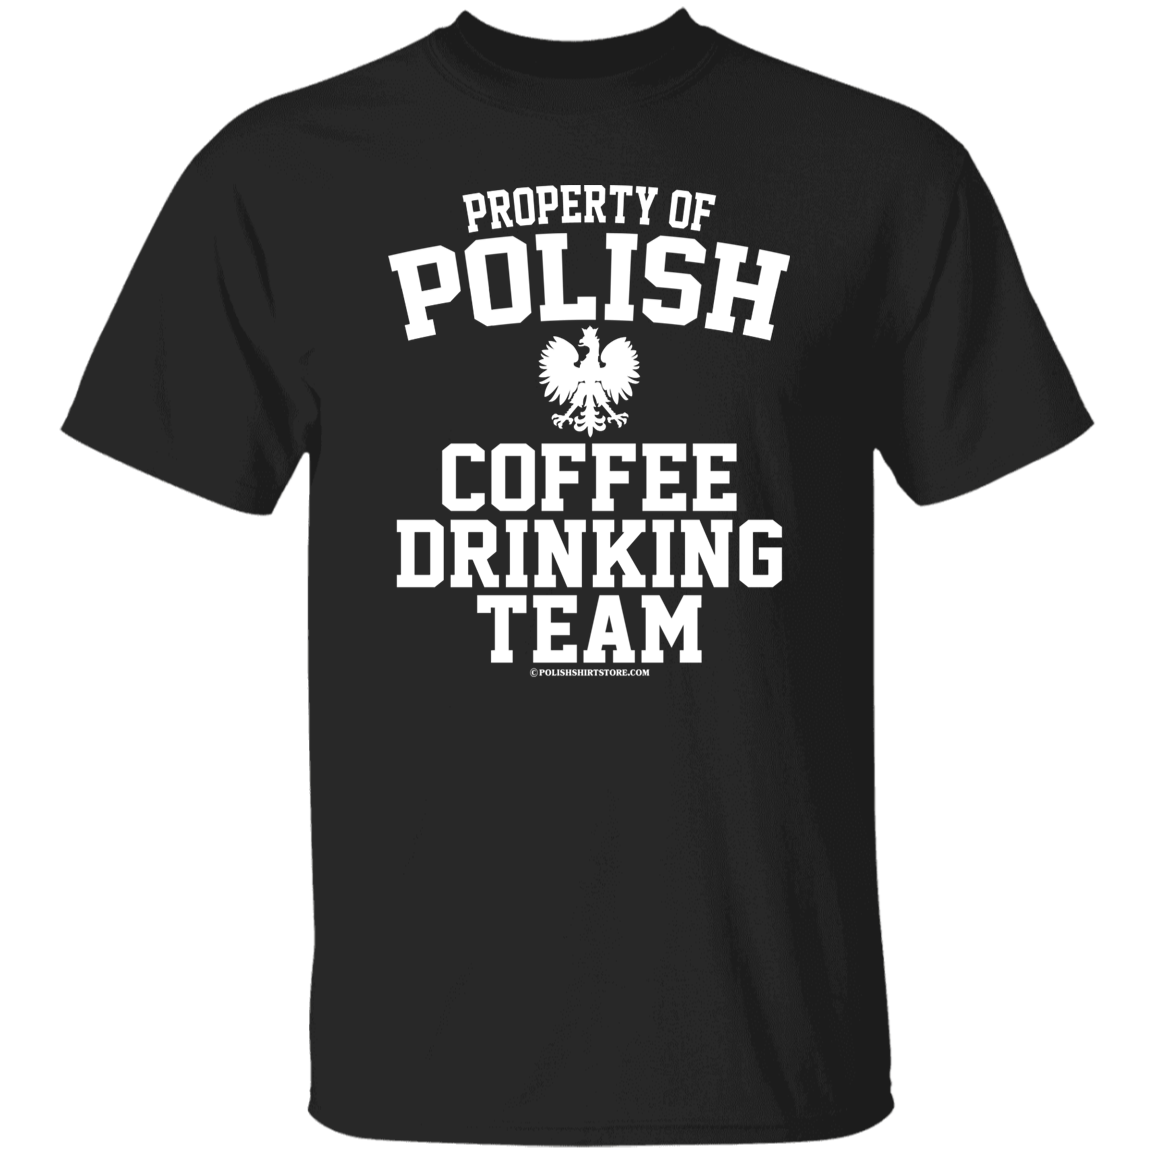 Property of Polish Coffee Drinking Team Apparel CustomCat G500 5.3 oz. T-Shirt Black S